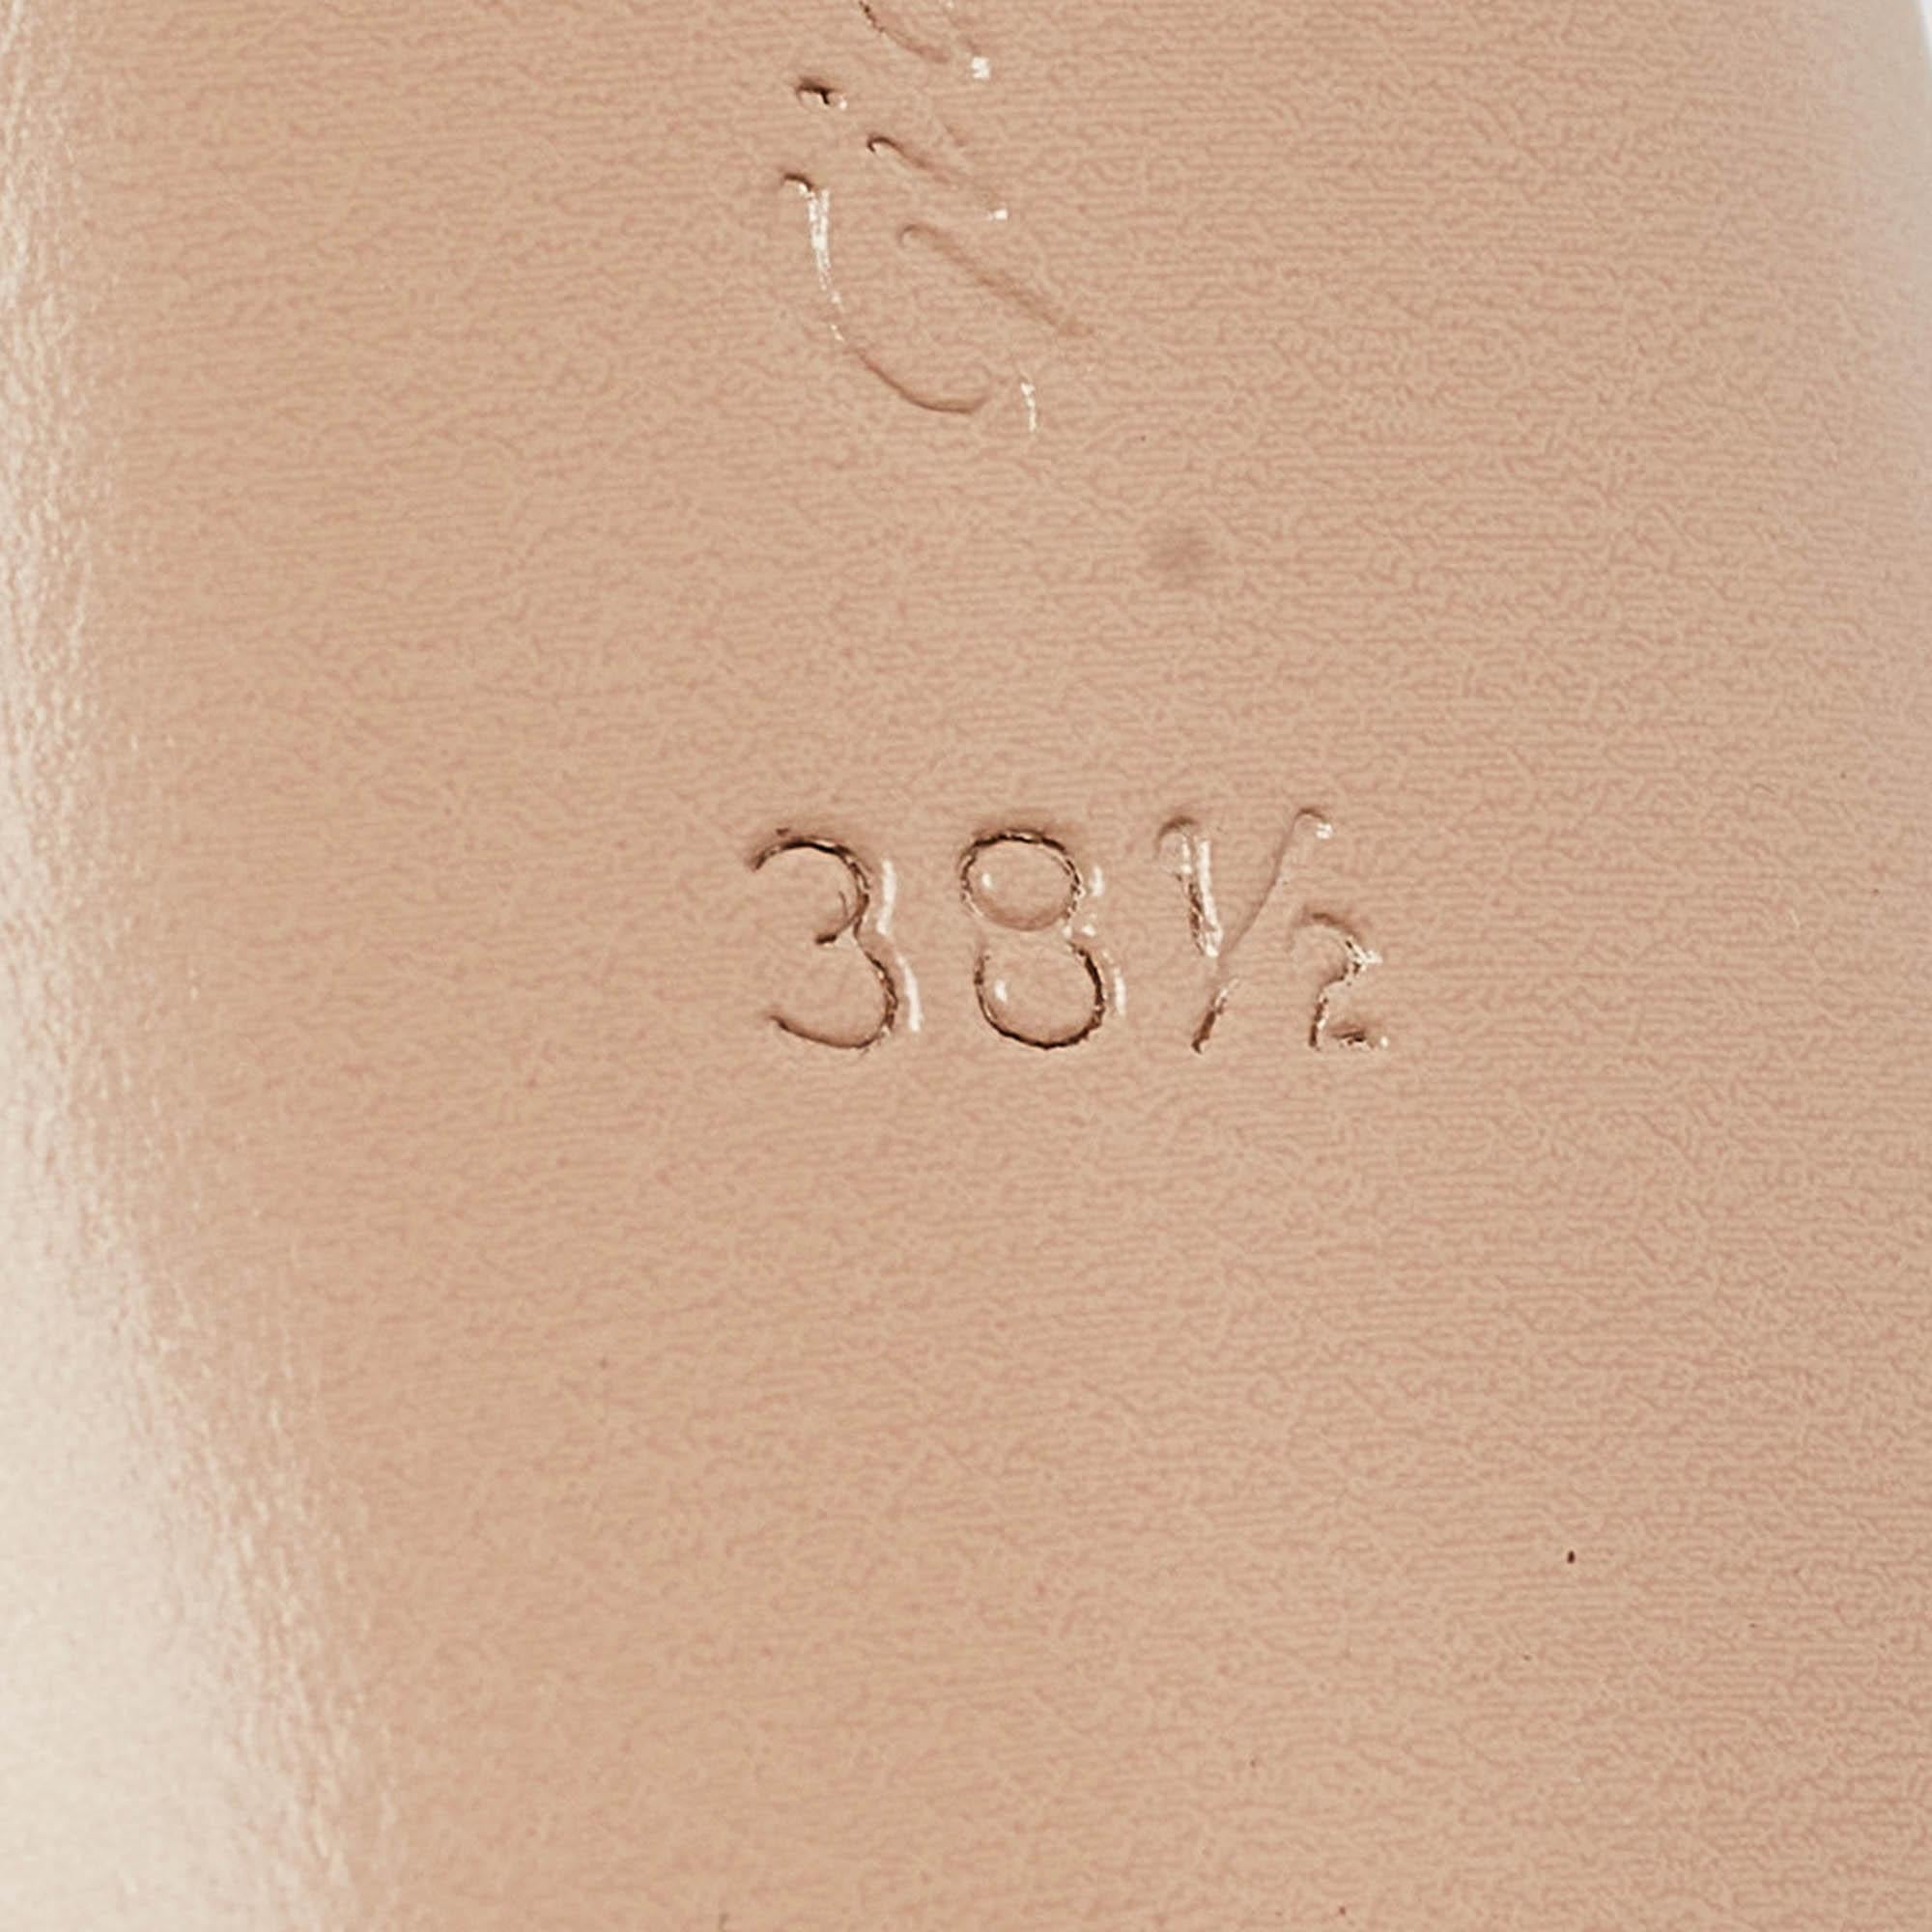 Gianvito Rossi Transparent PVC Elle Slide Sandals Size 38.5 For Sale 3